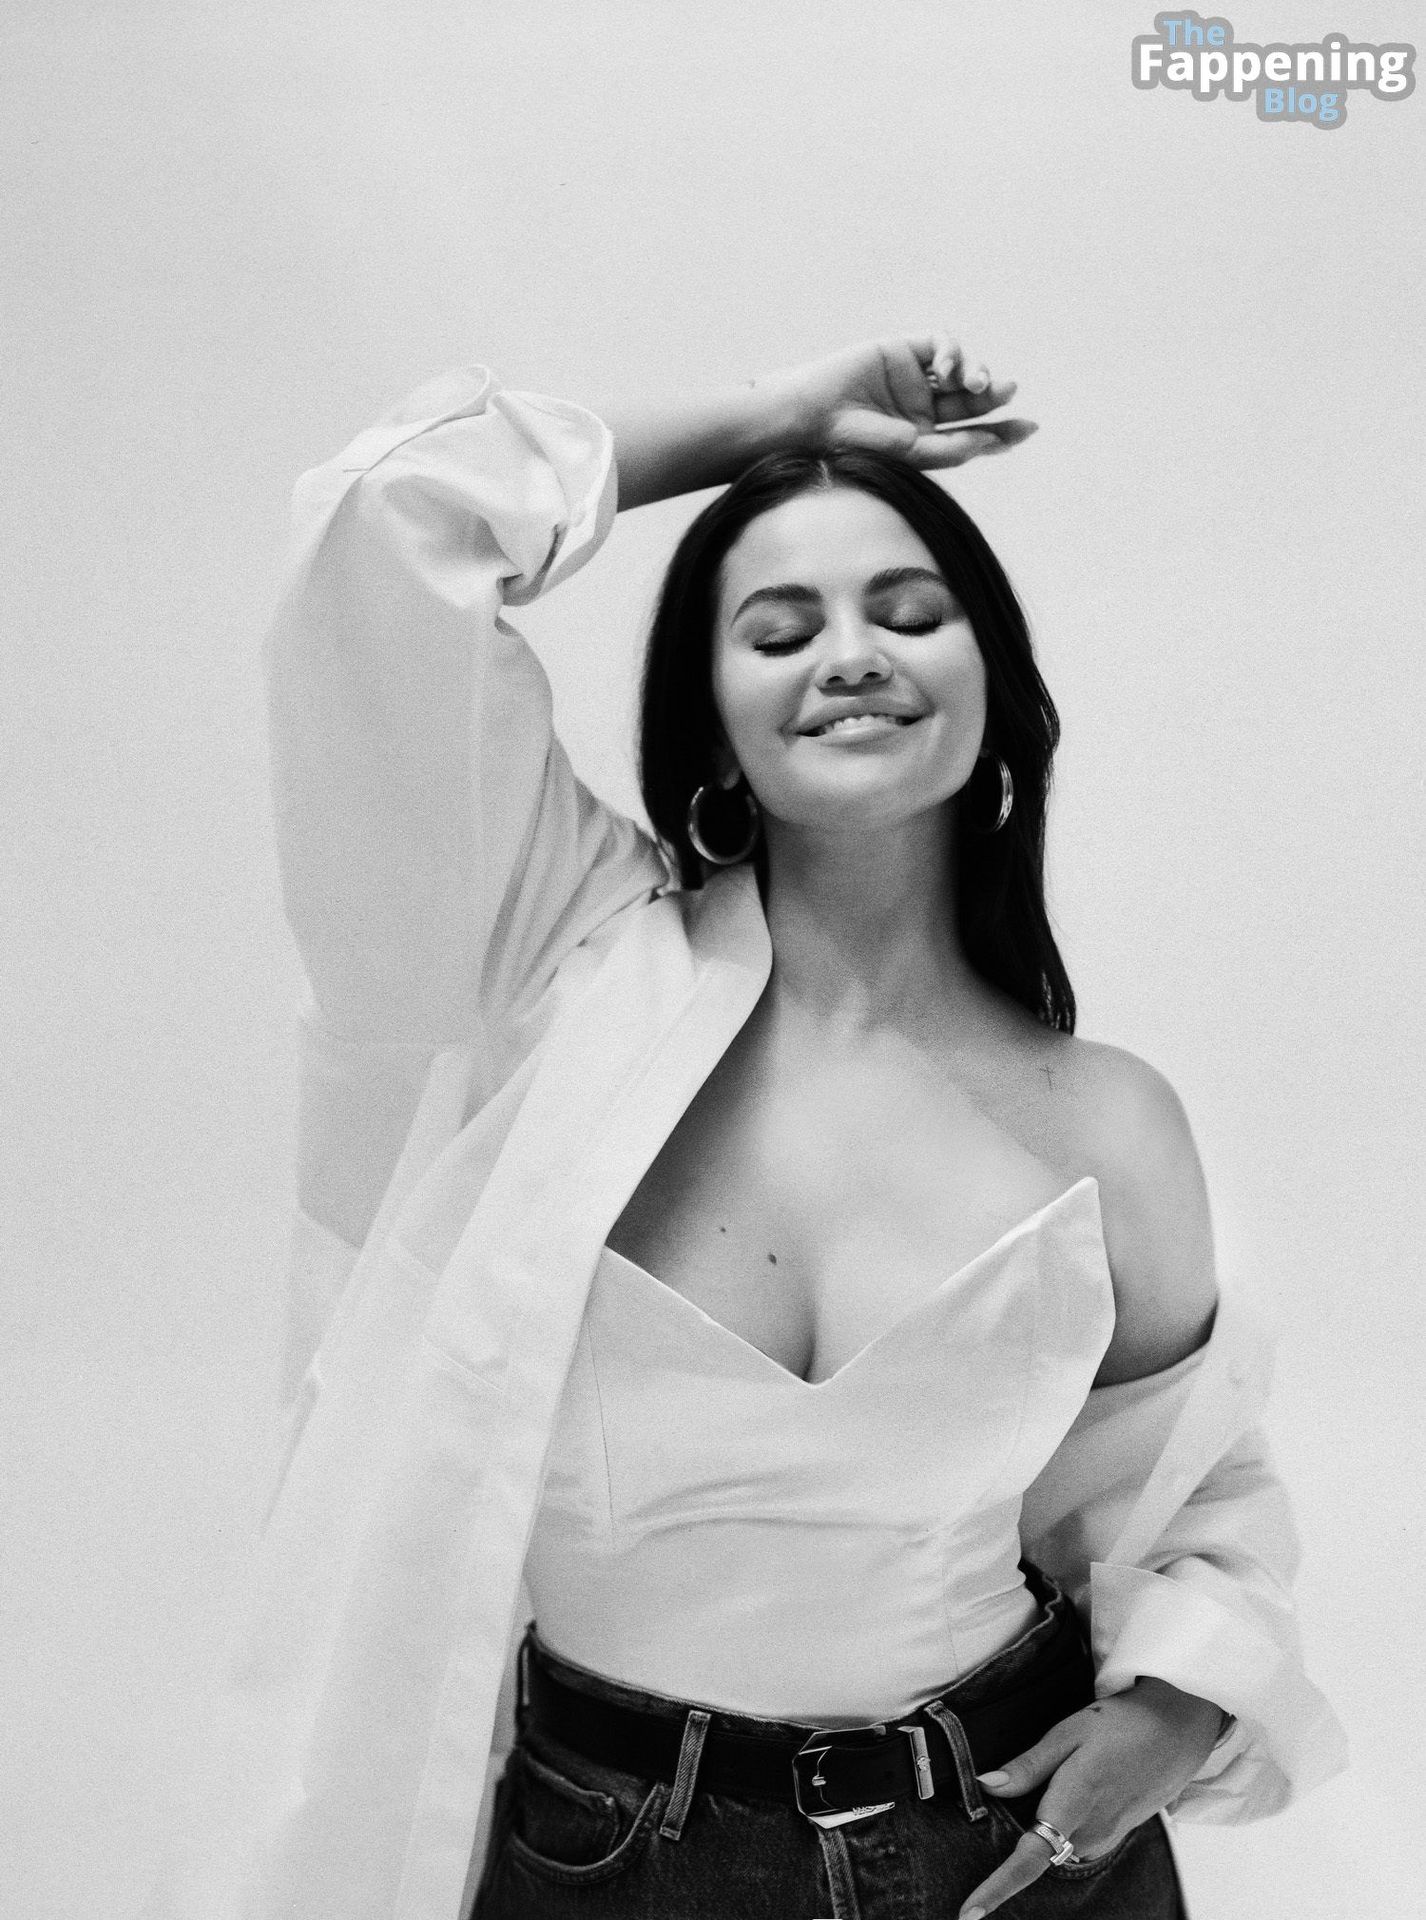 Selena-Gomez-Sexy-4-The-Fappening-Blog.jpg